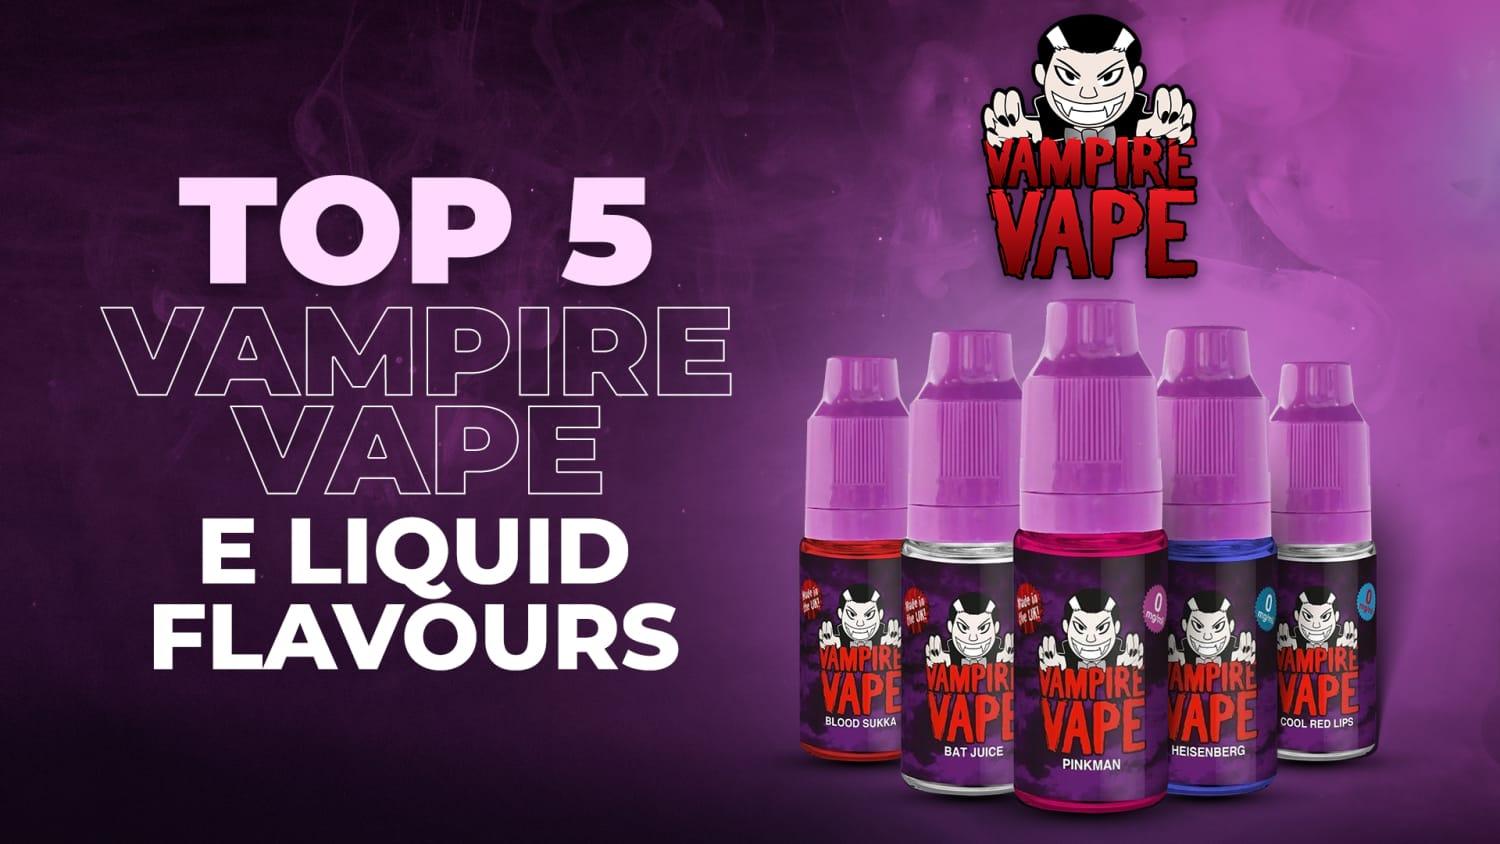 Top 5 Vampire Vape E Liquid Flavours